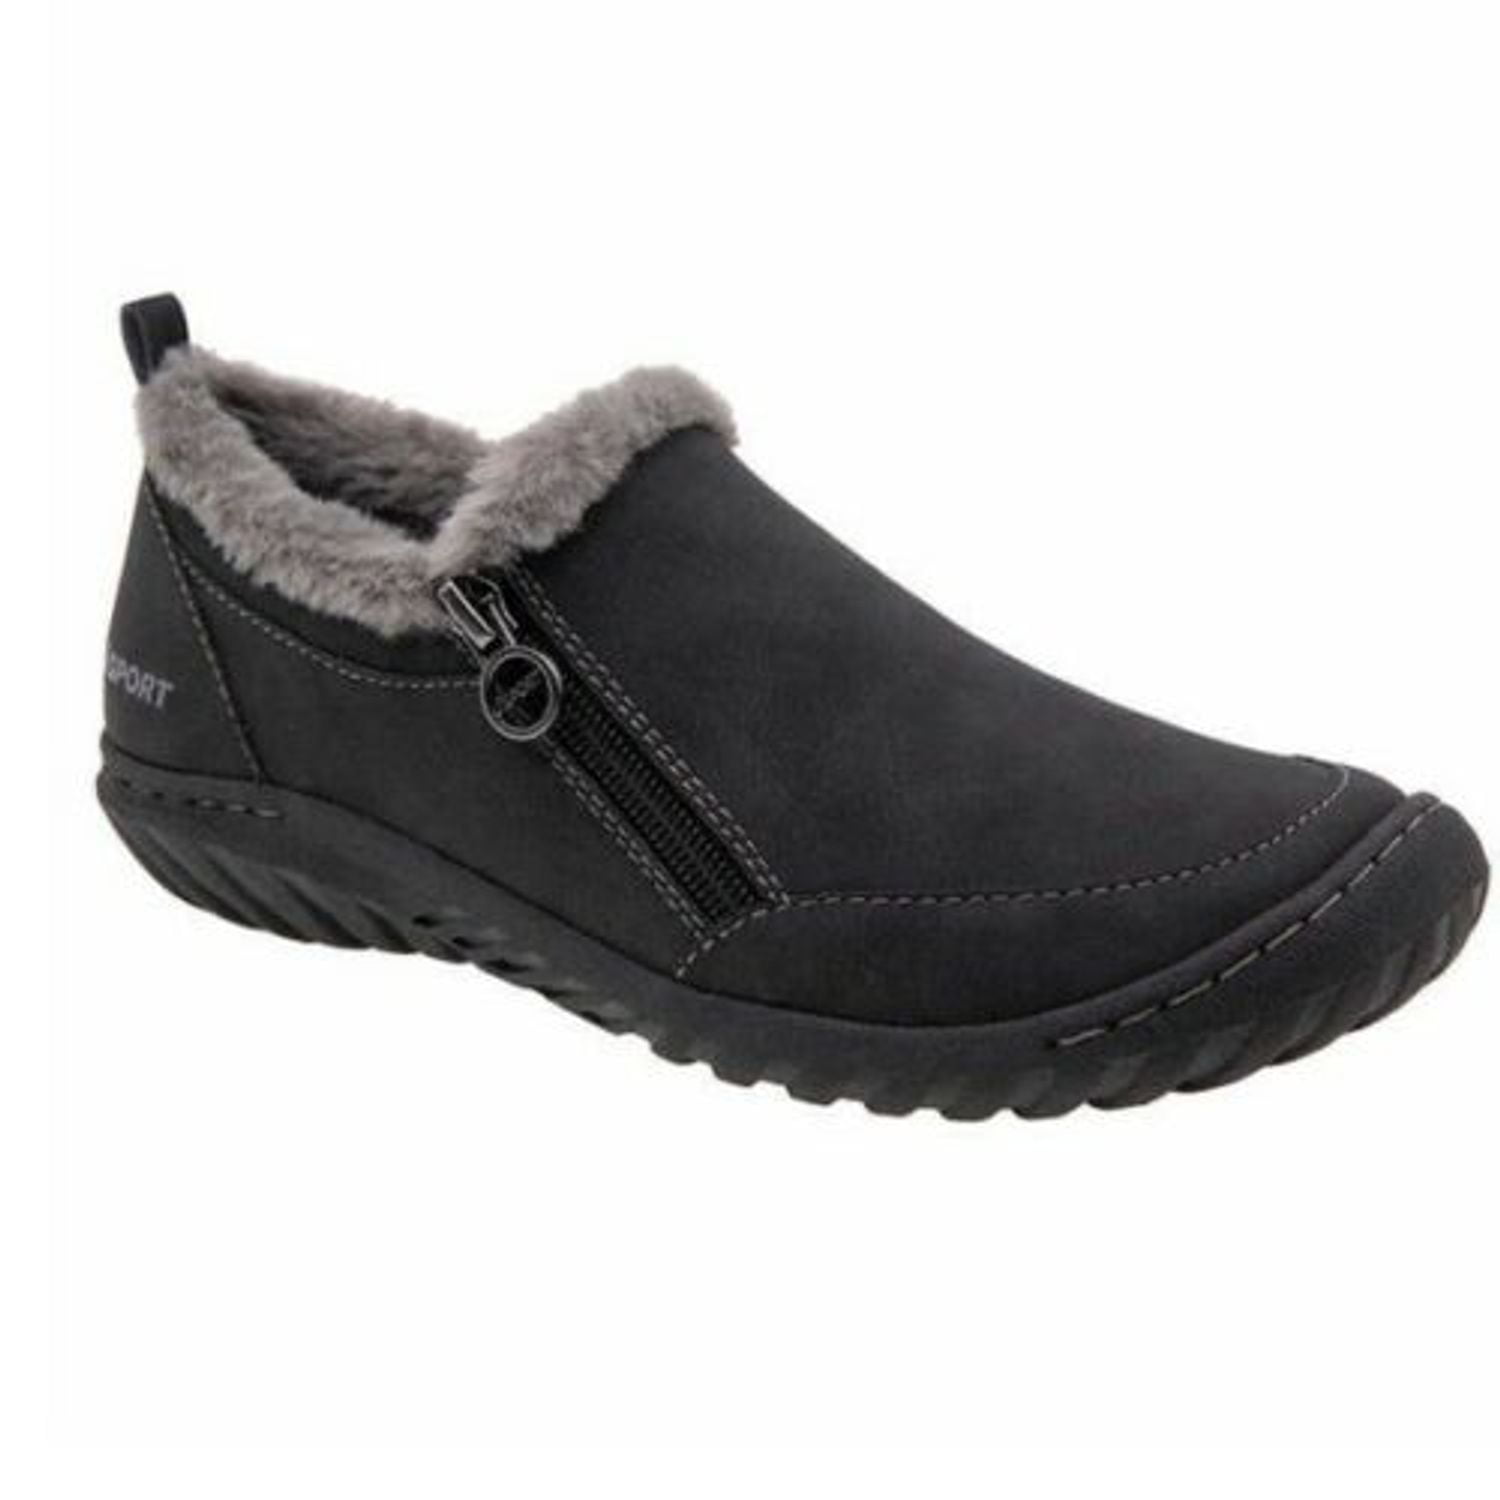 JSPORT Ladies' Slip On Shoe In Black, 6 - Walmart.com